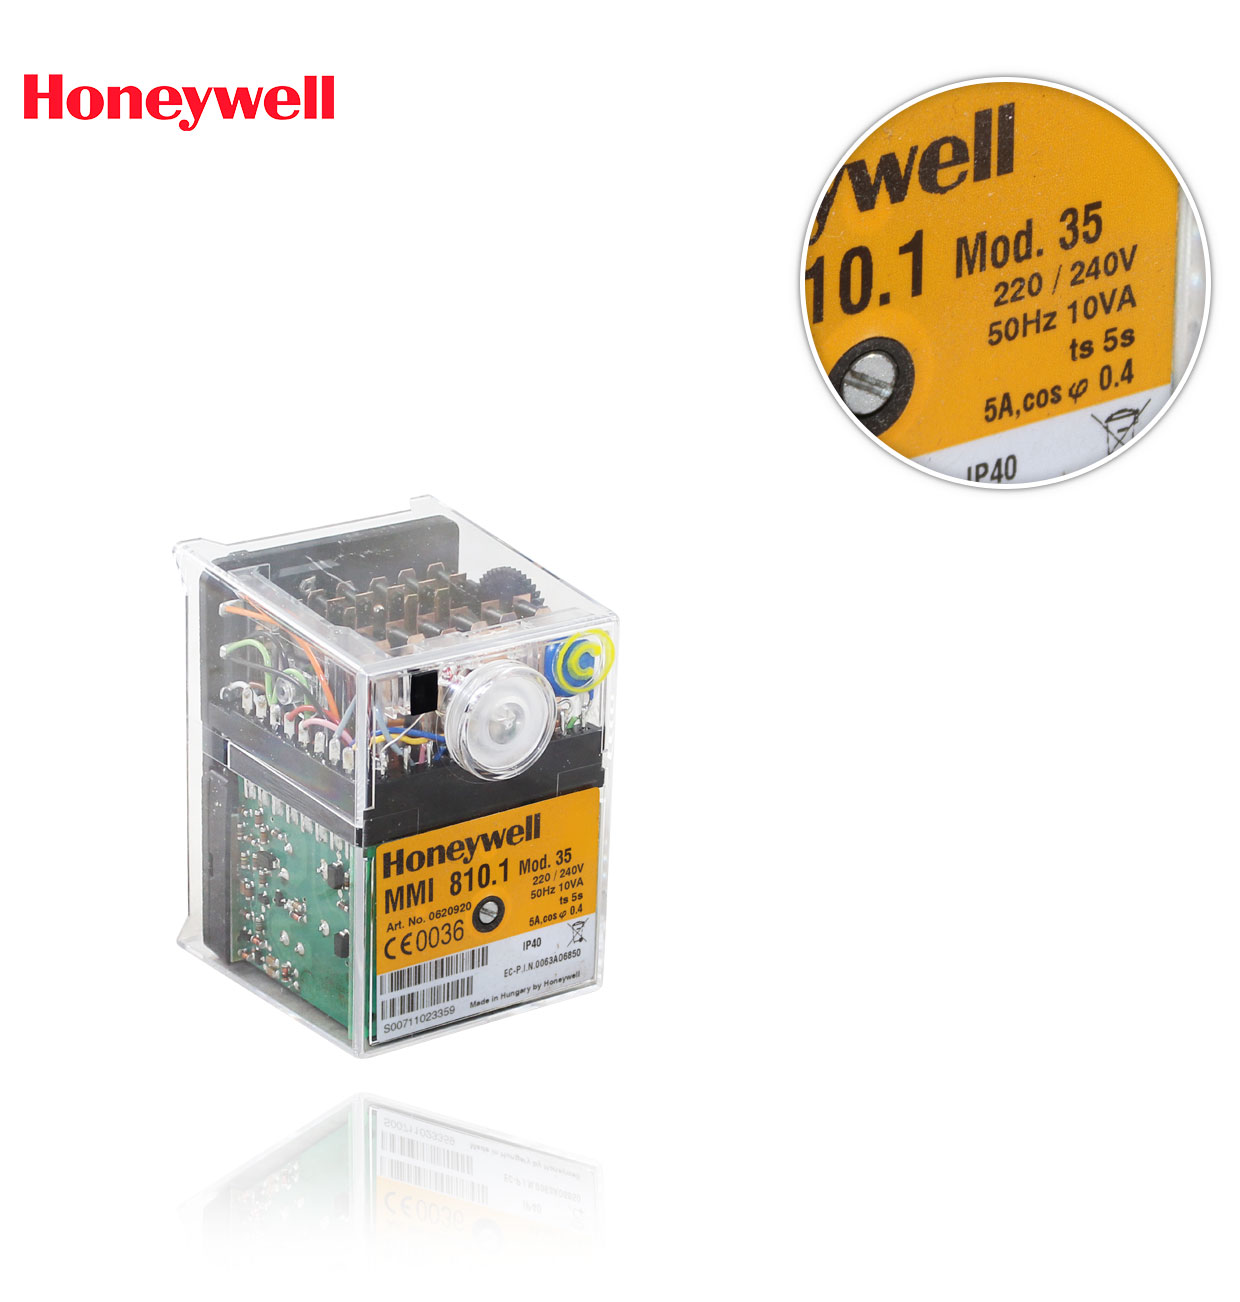 MMI 810.1 (Mod.35) SATRONIC/ HONEYWELL CONTROL BOX